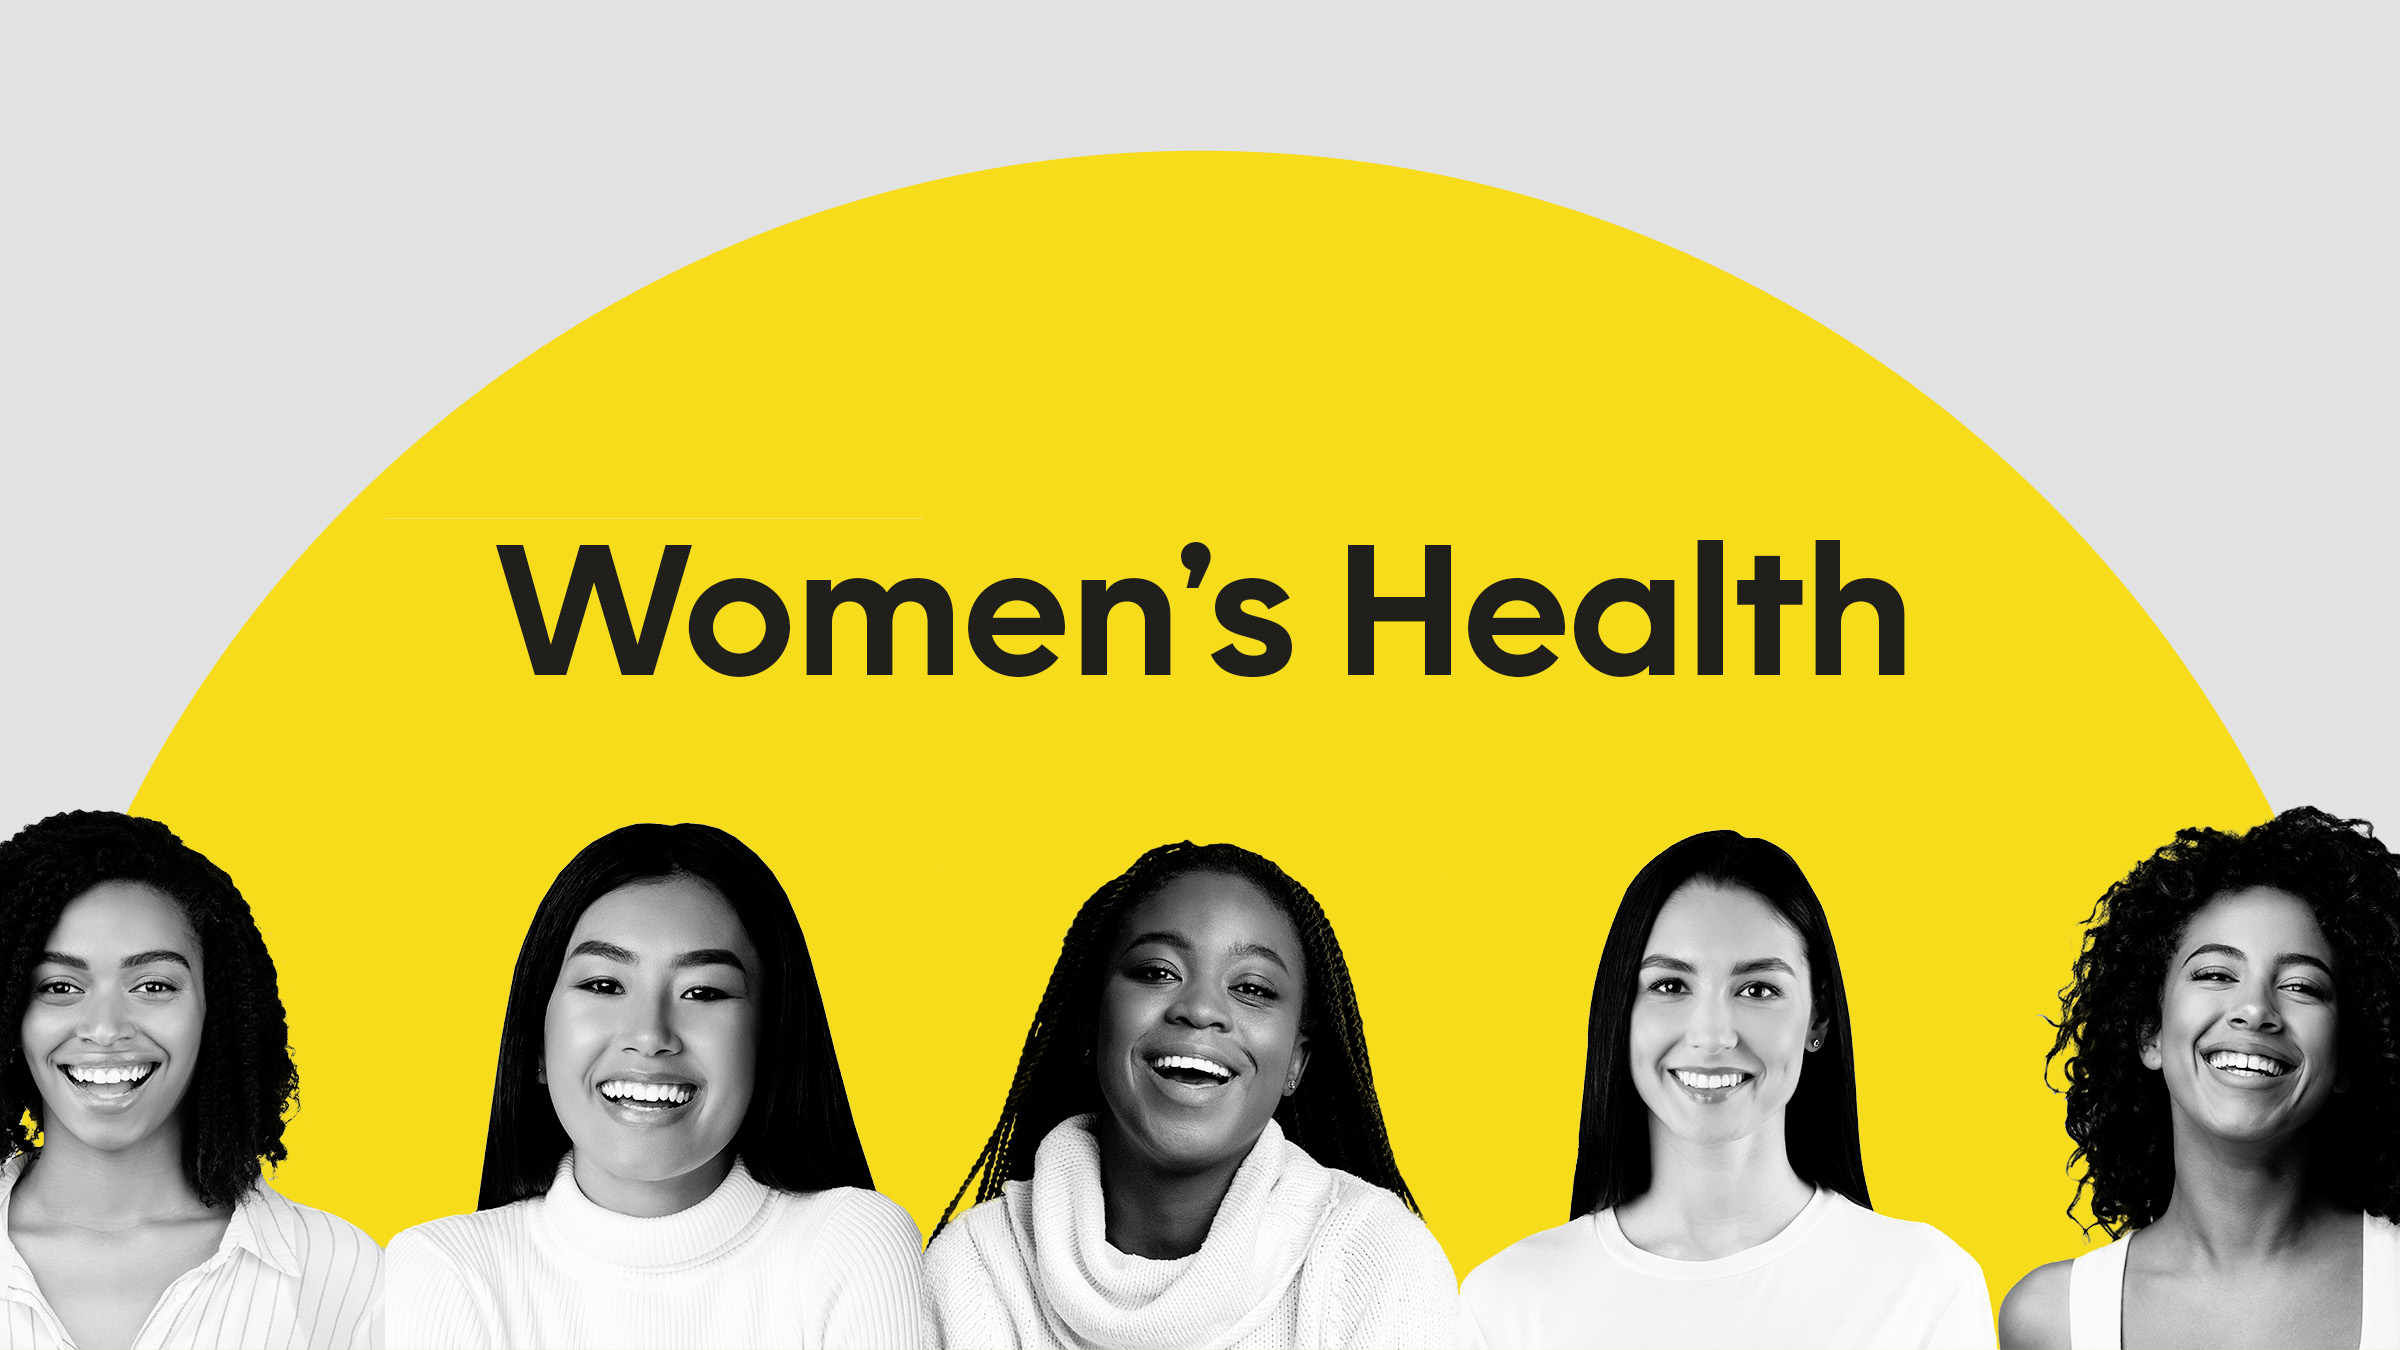 Women: womens health portrait graphic-1305354340